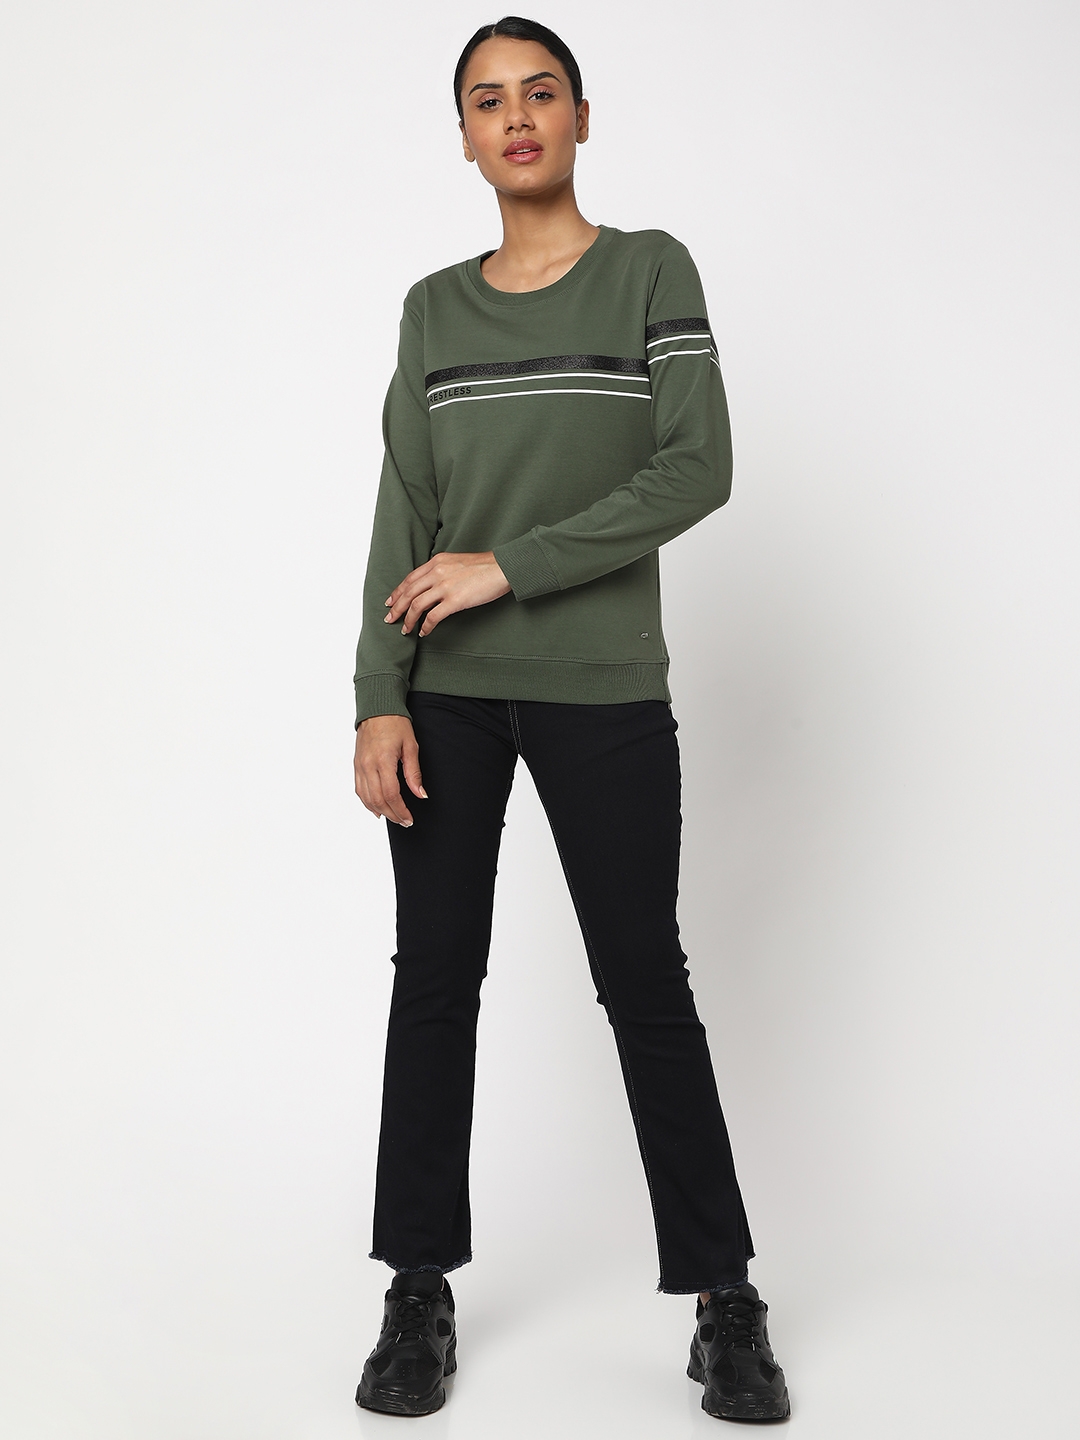 spykar | Spykar Olive Green Cotton Blend Full Sleeve Round Neck Sweatshirt For Women 5